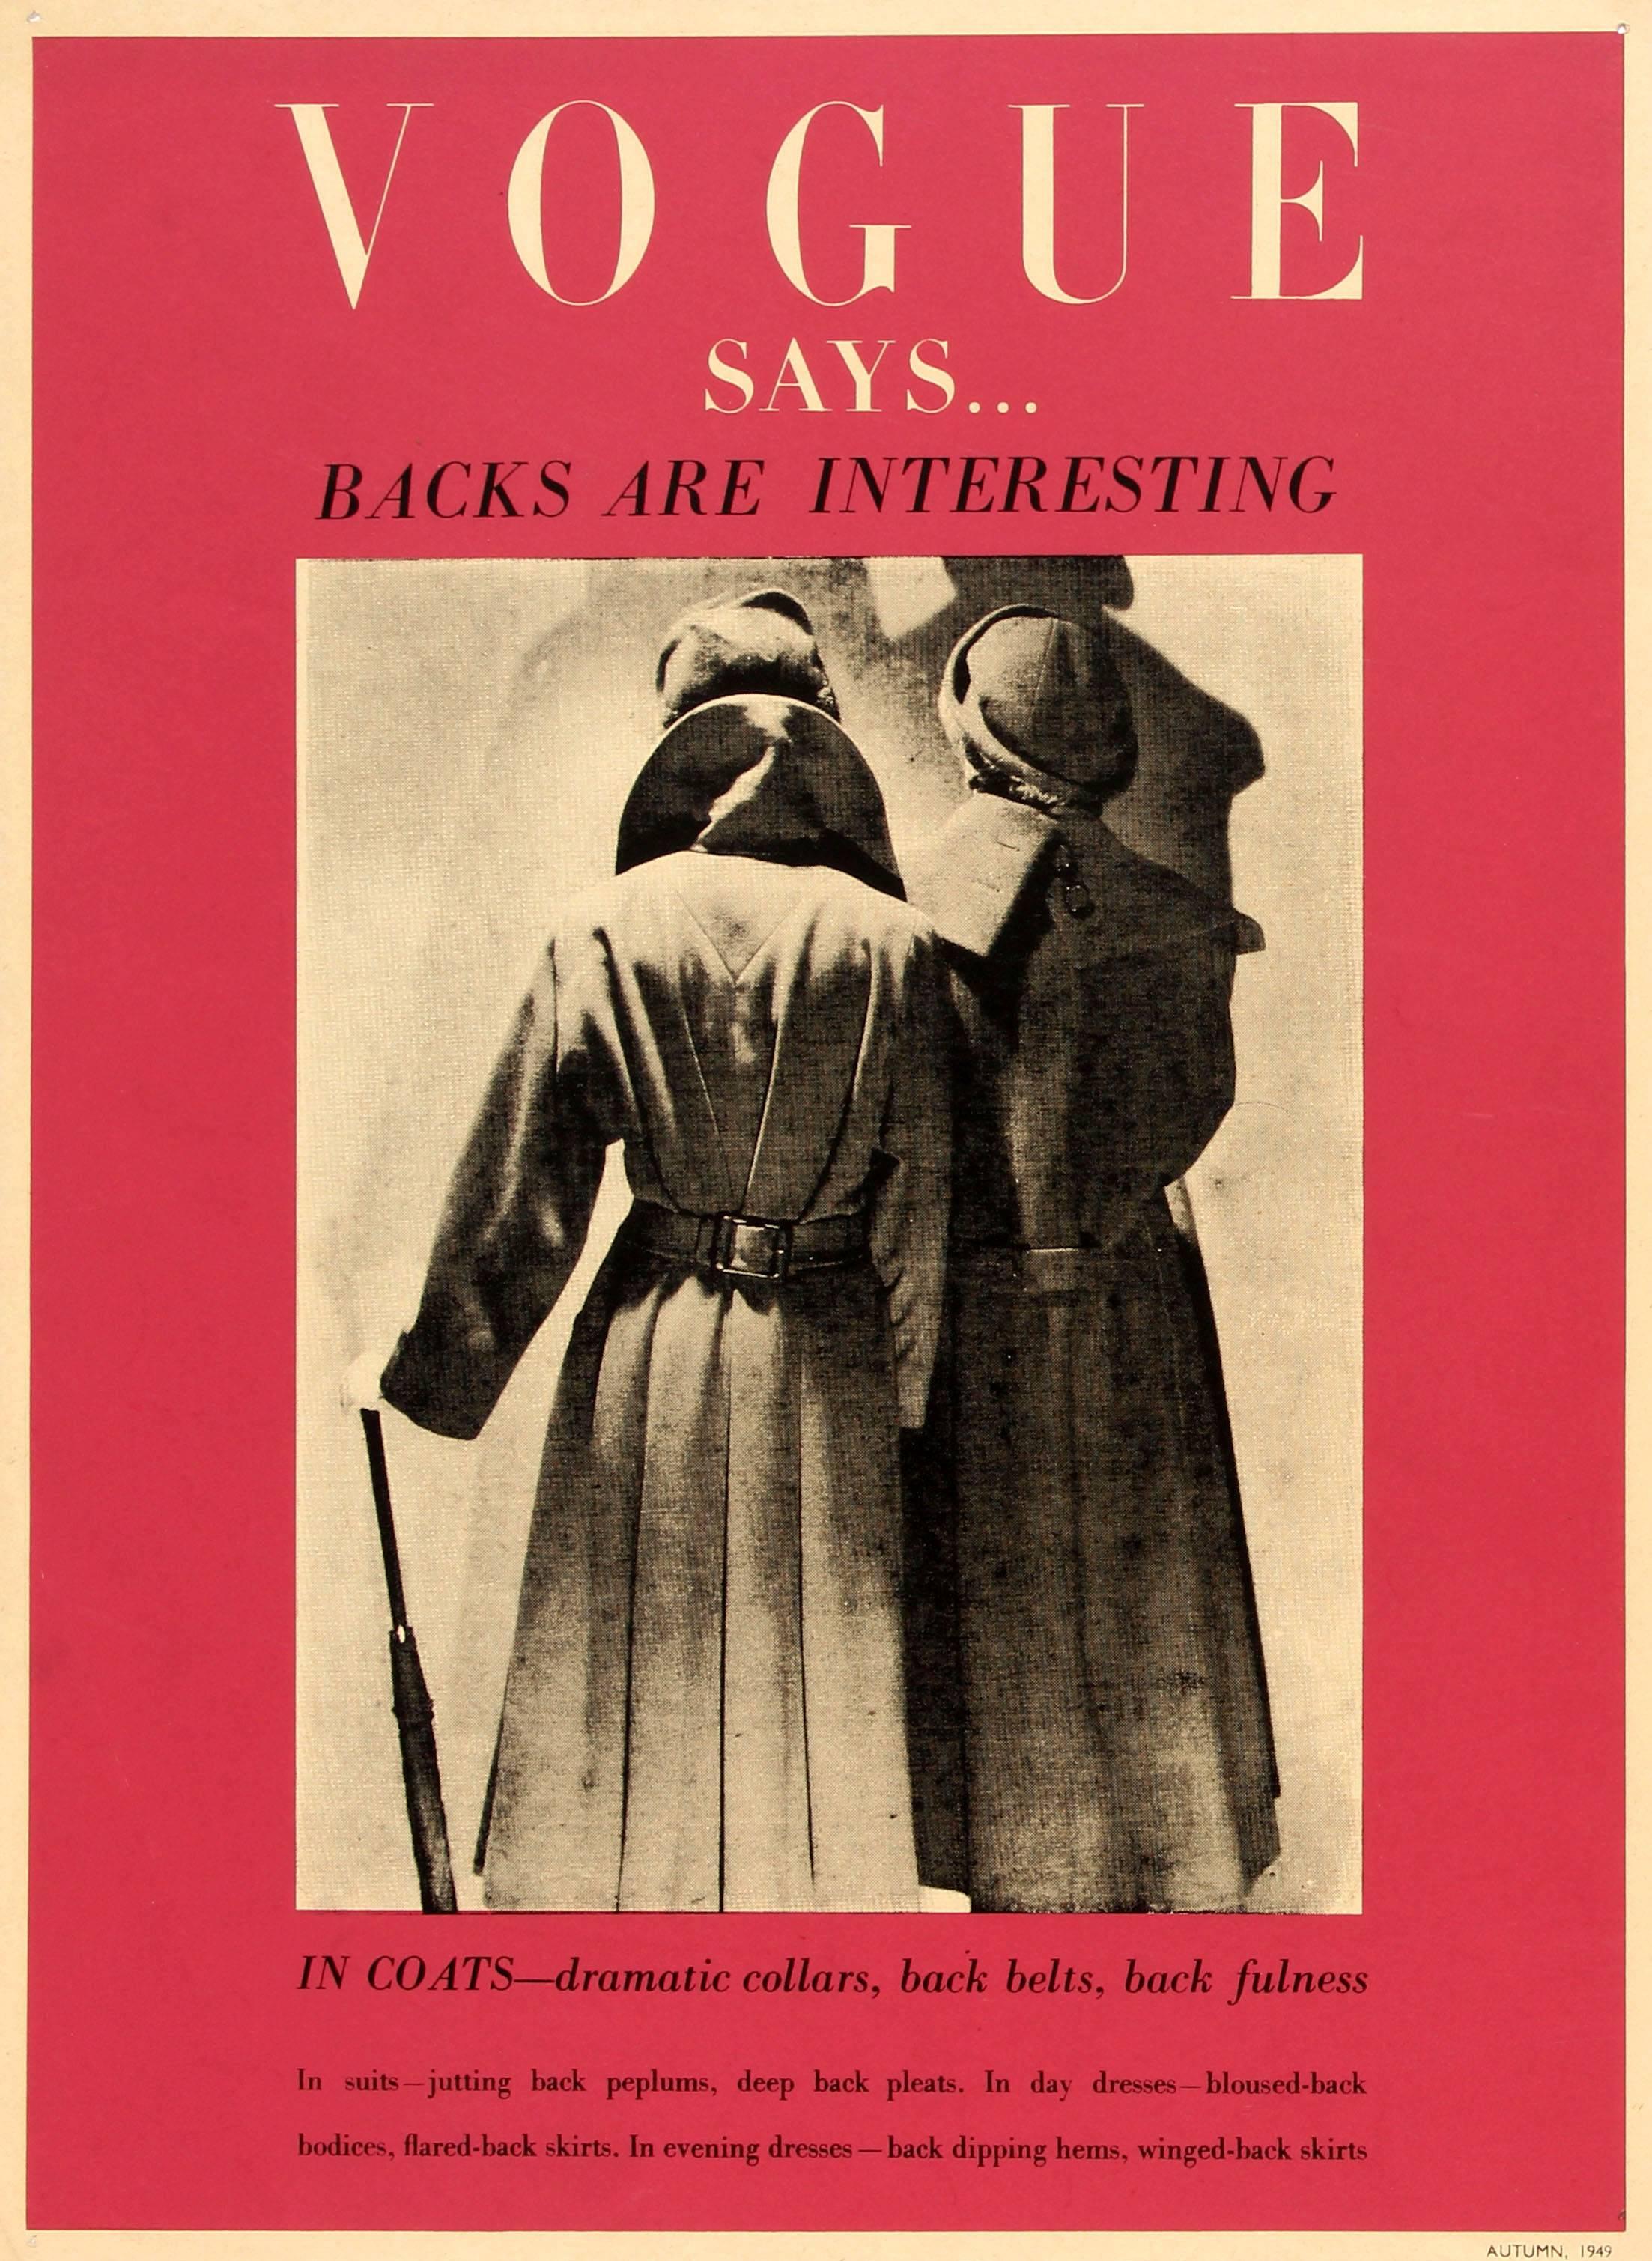 Unknown Print - Original Vintage Fashion Advertising Poster - Vogue Says Backs Are Interesting